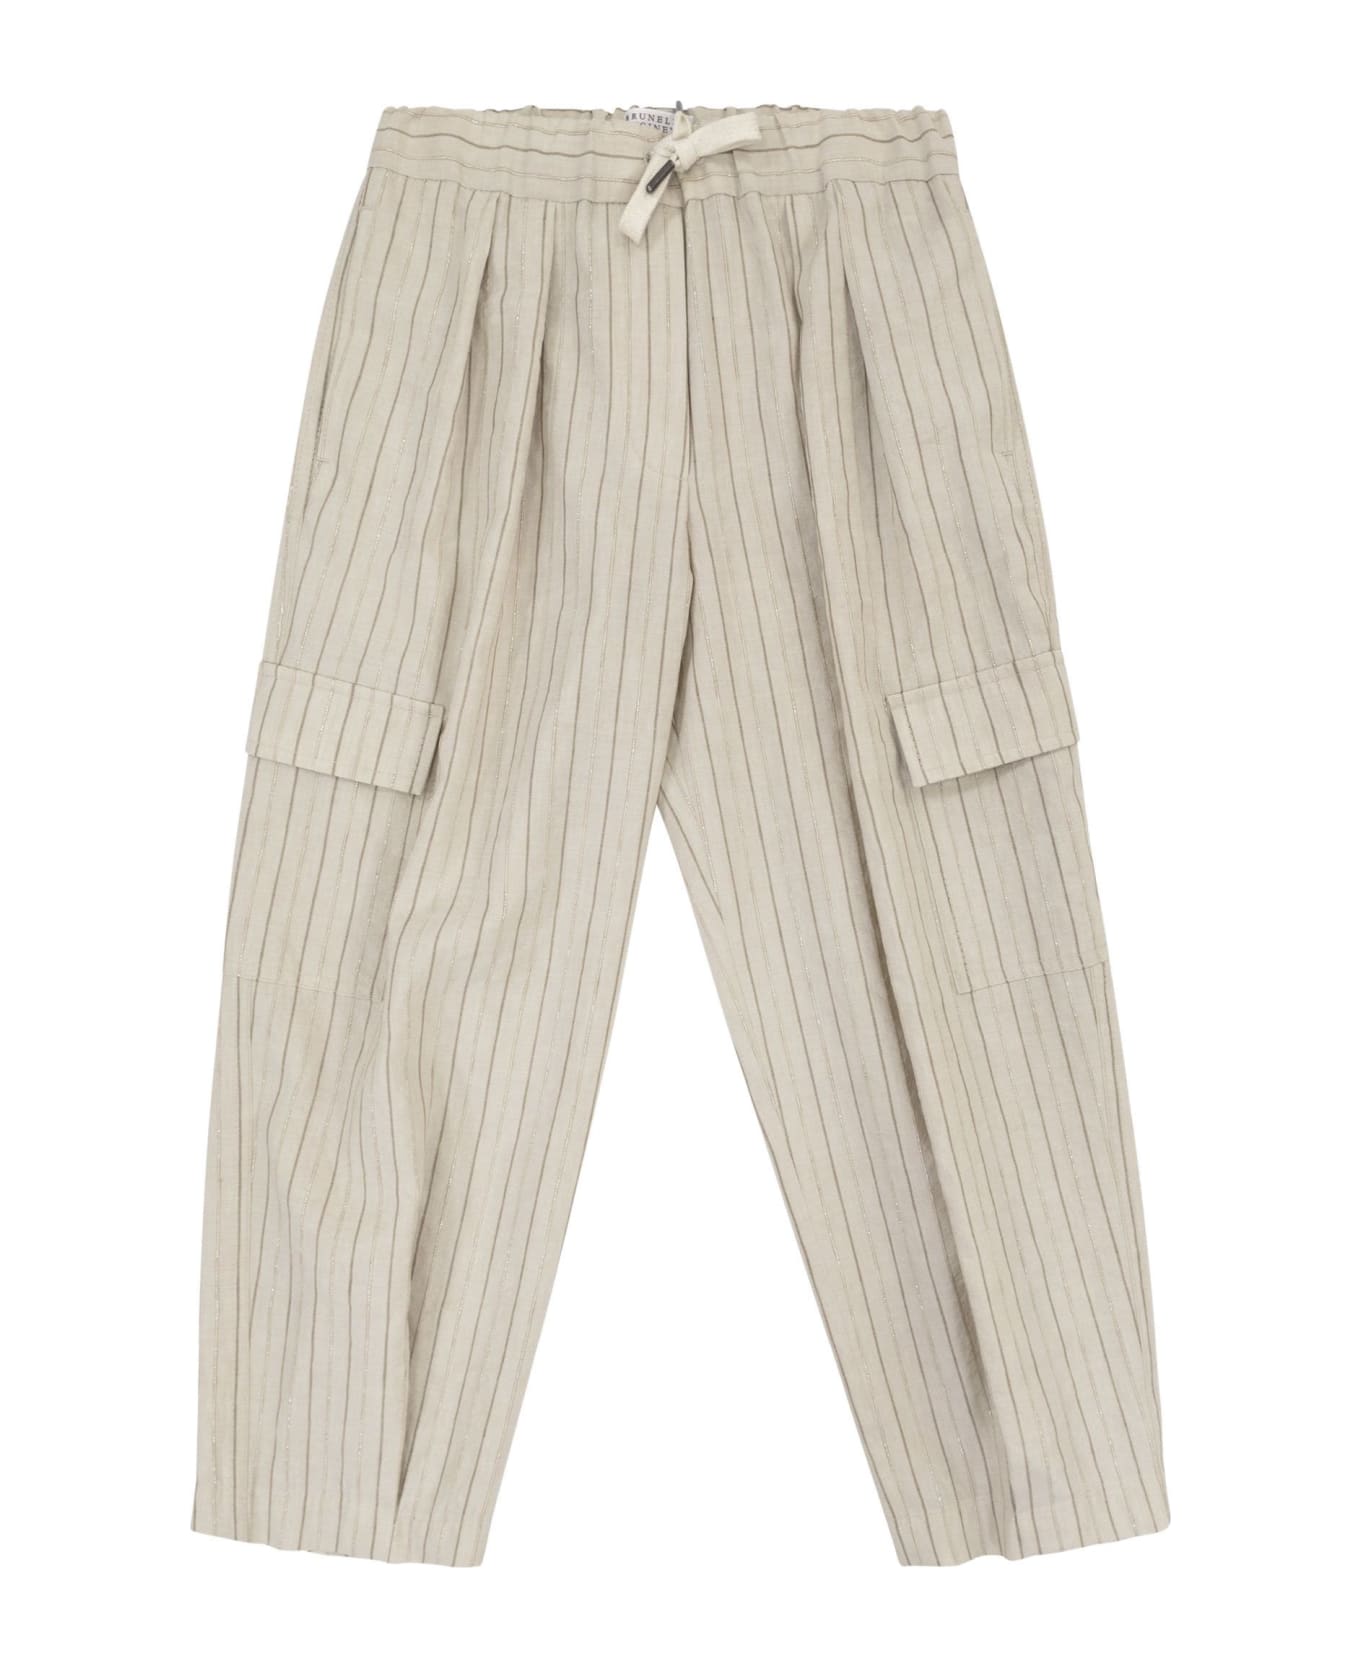 Brunello Cucinelli Linen Blend Comfort Cargo Trousers - Sand ボトムス